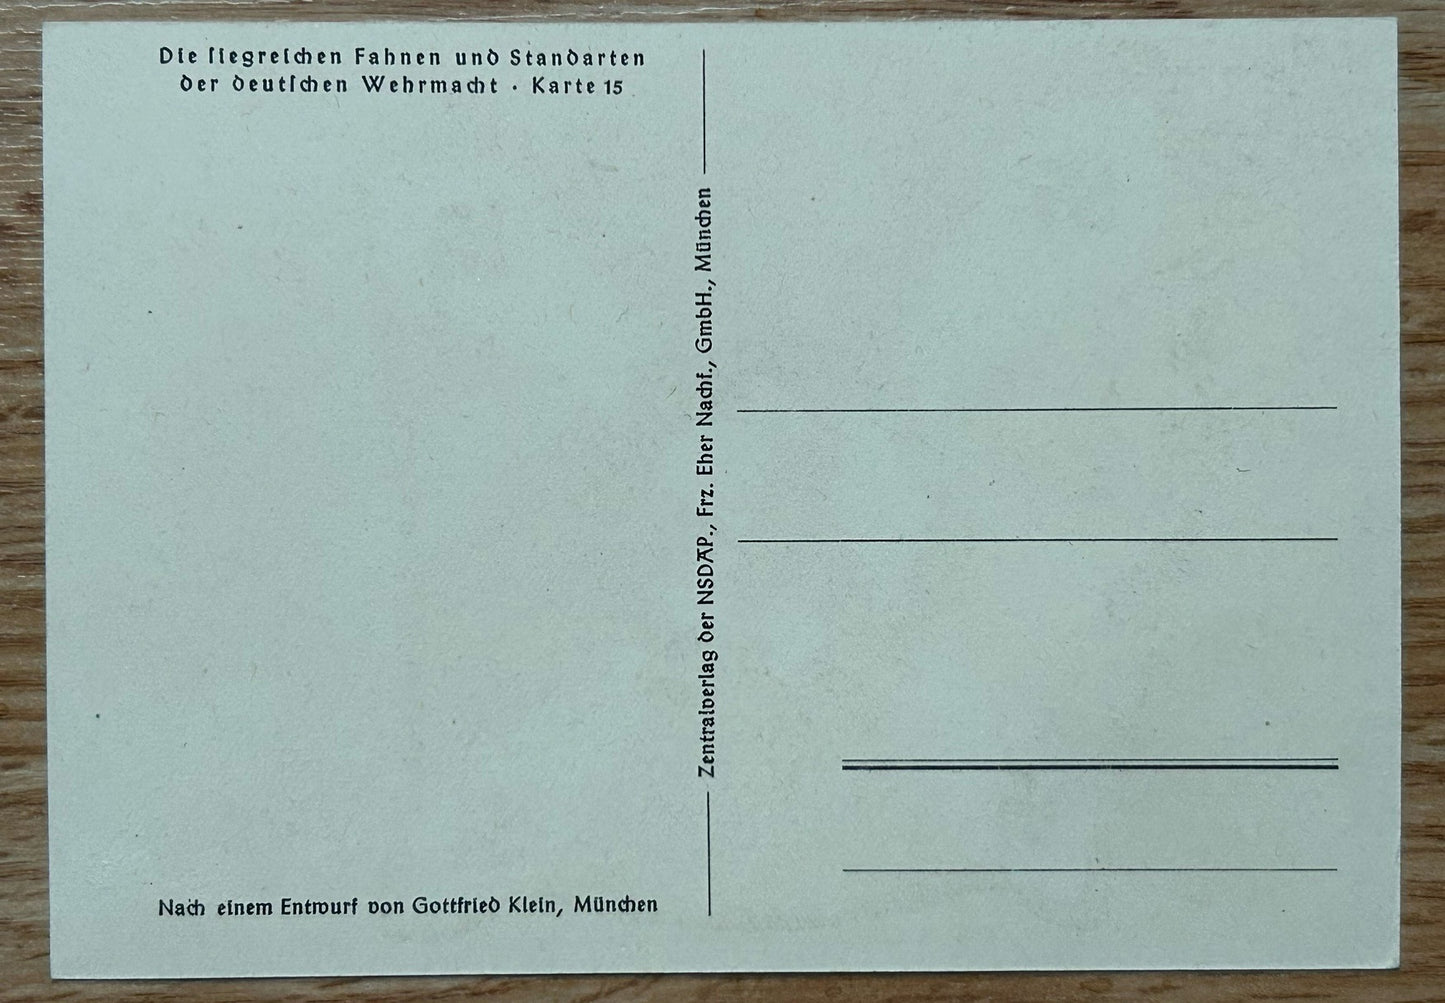 Luftwaffe art postcard - Gottfried Klein standards series